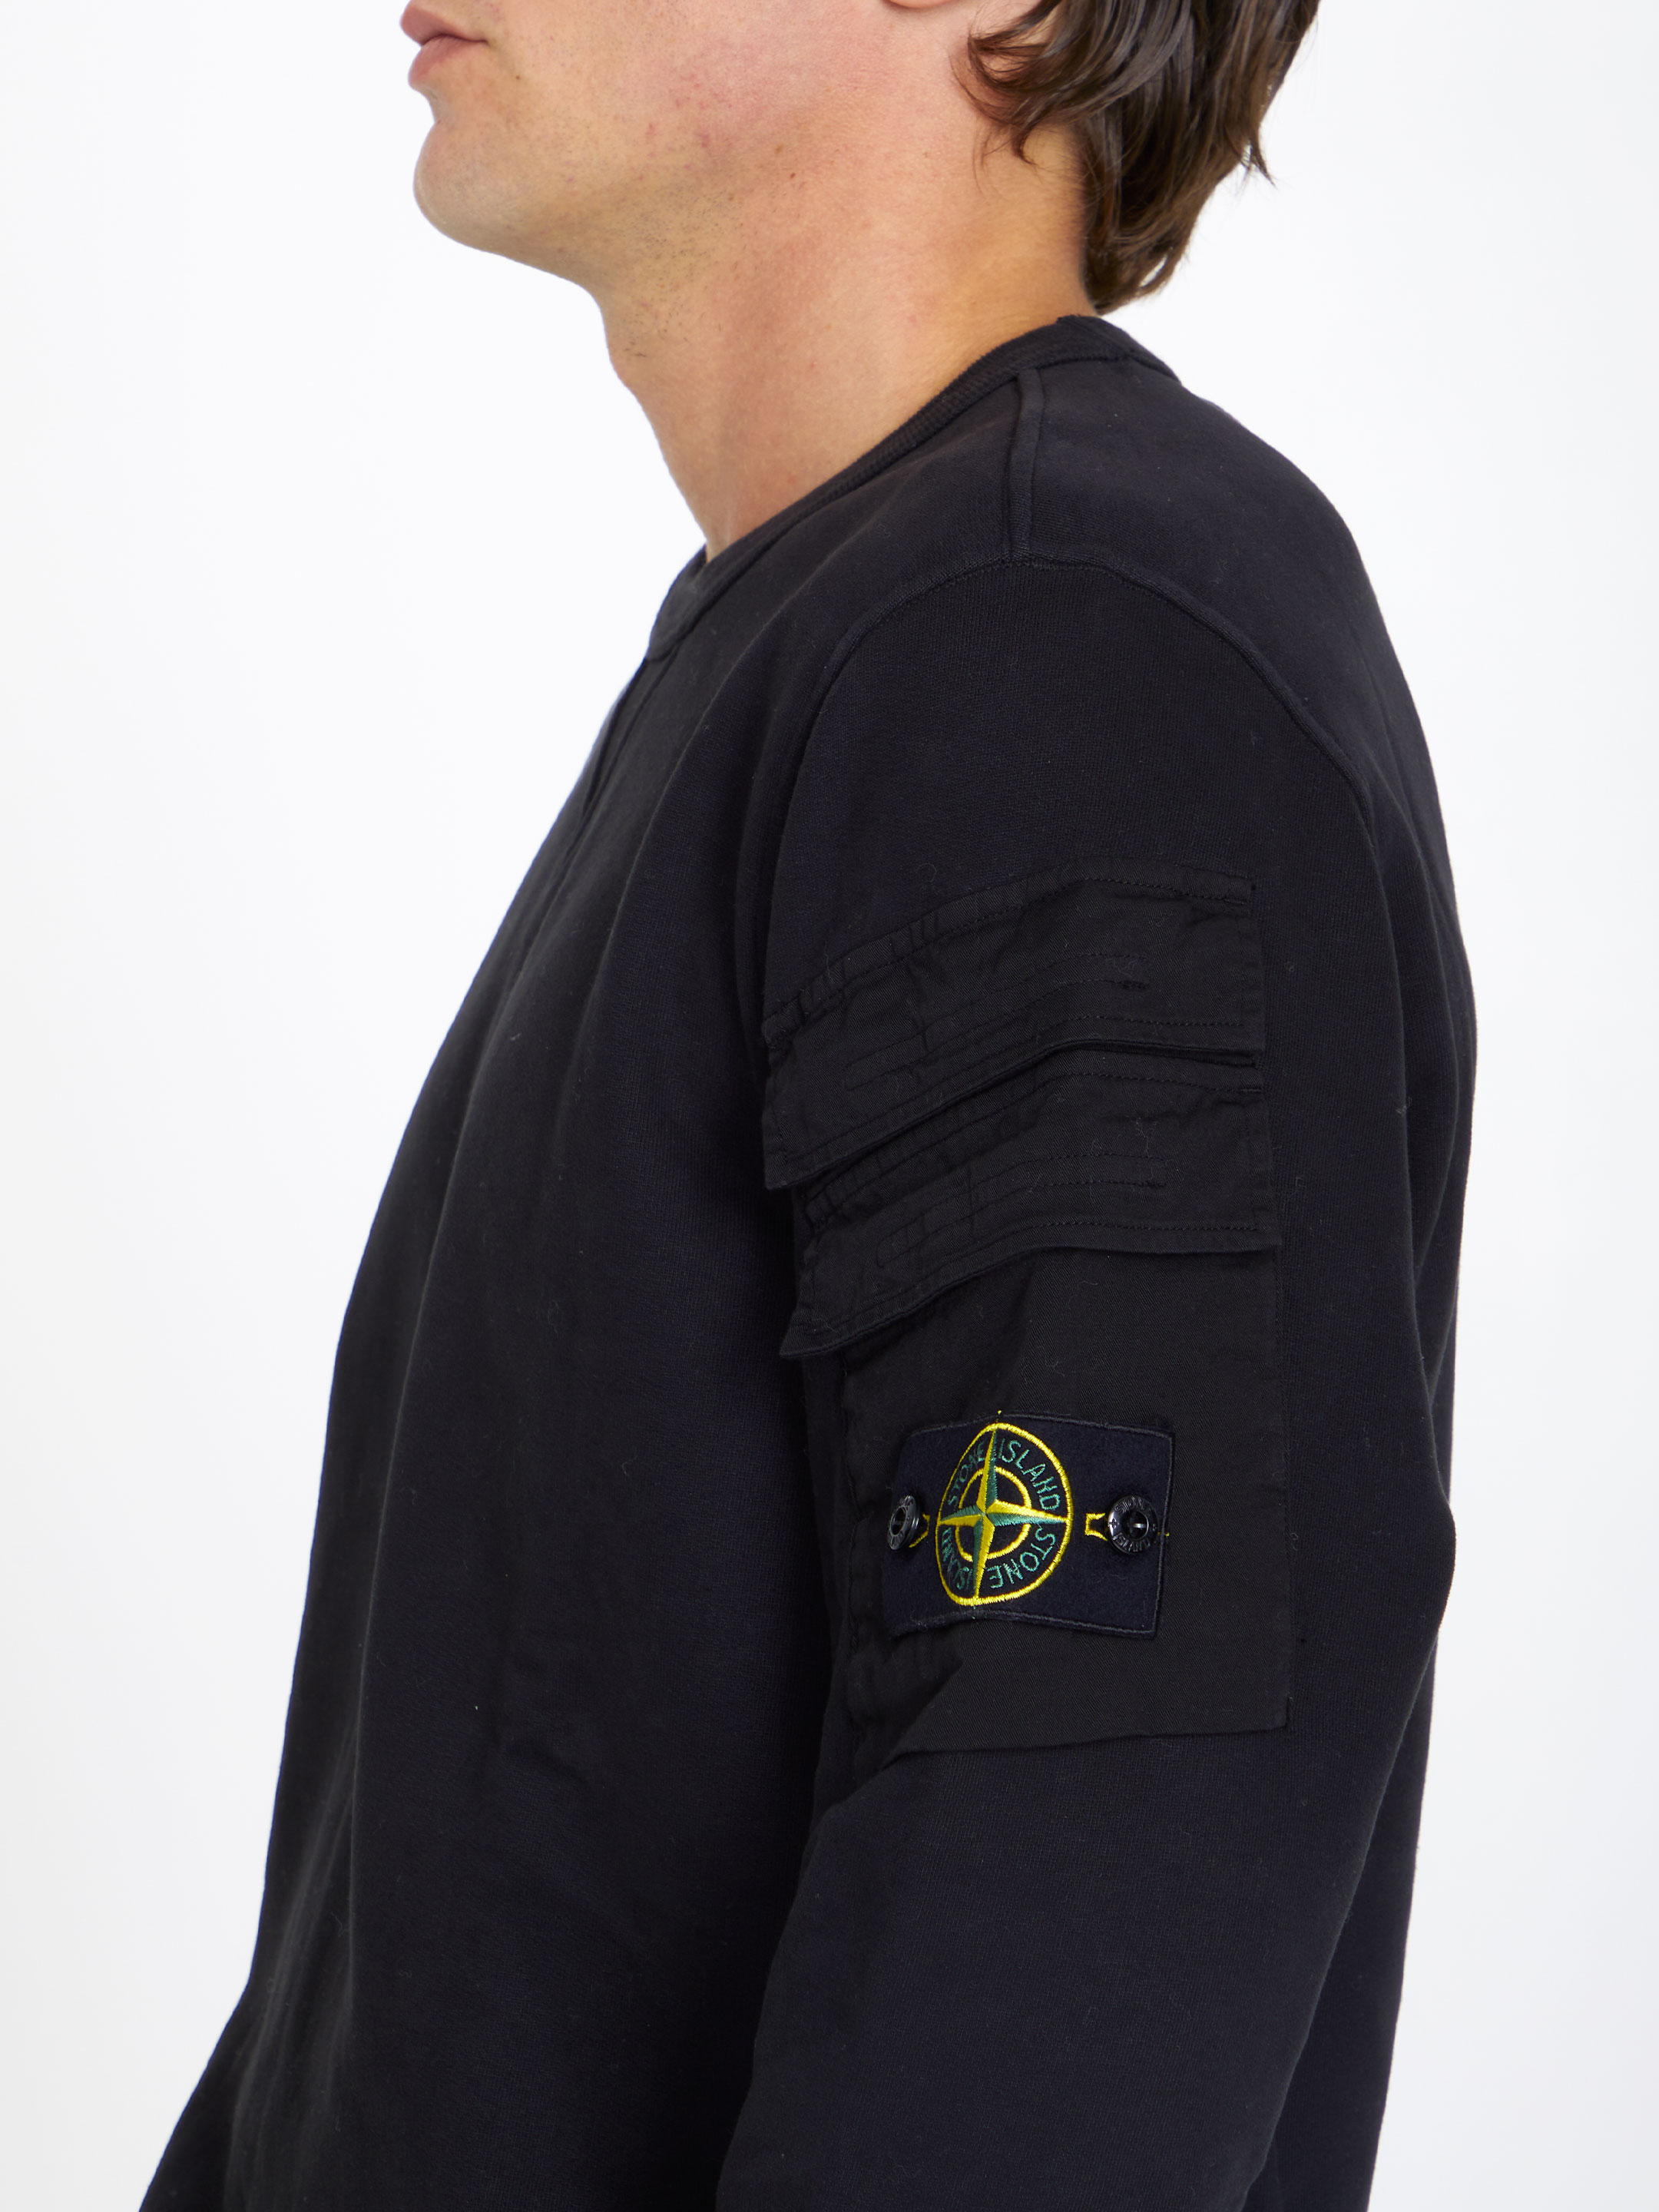 STONE ISLAND - Black cotton sweatshirt | Leam Roma - Luxury 